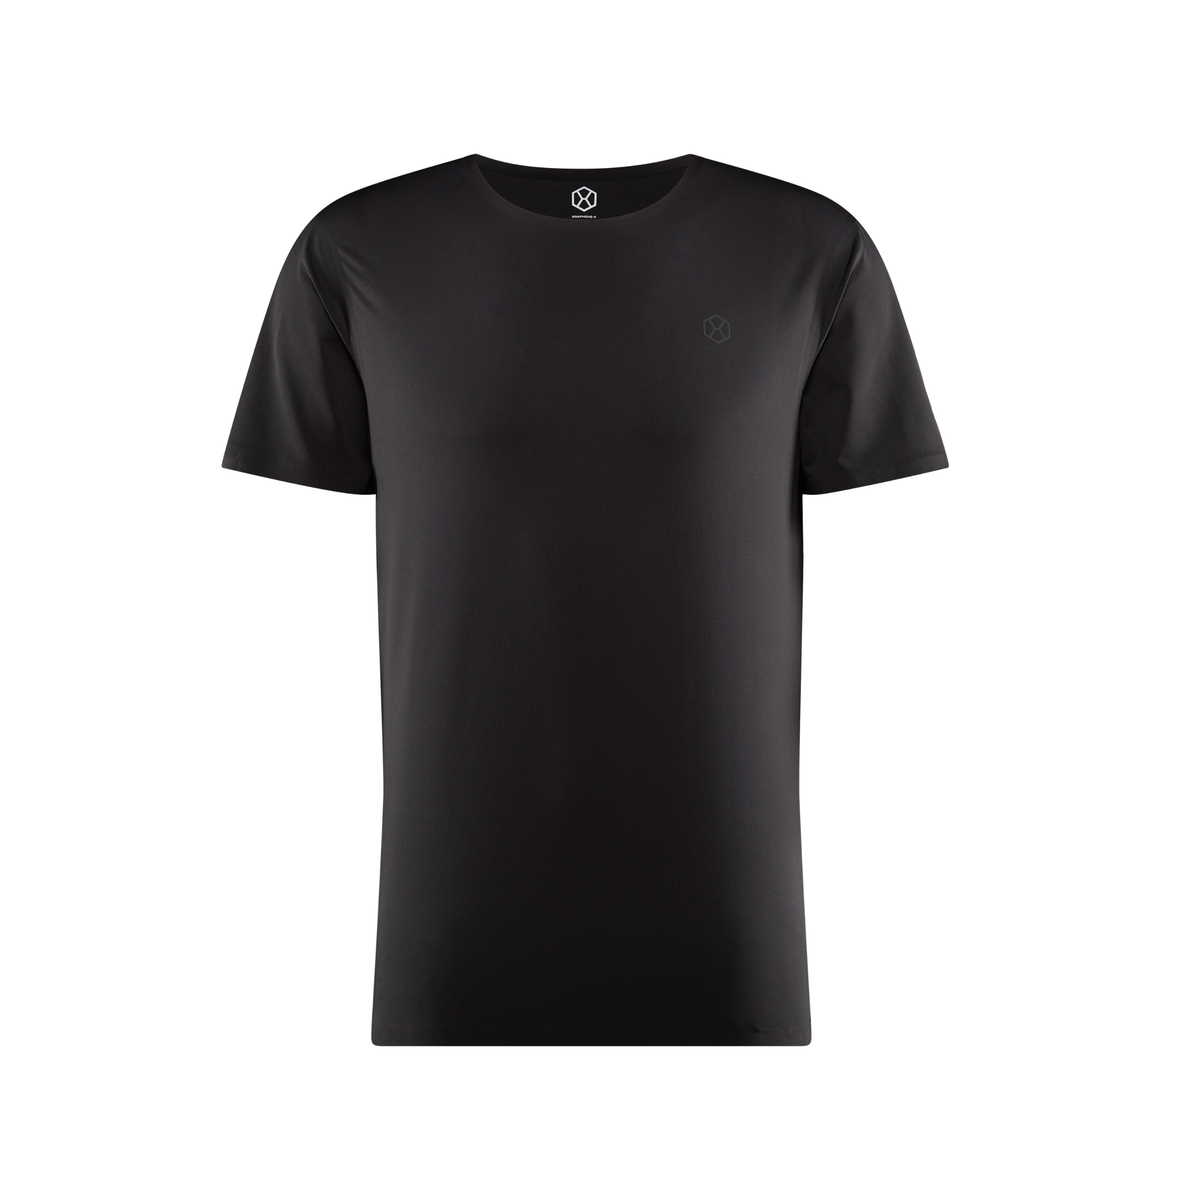  adidas Men's Yoga Base T-Shirt, Black, X-Small